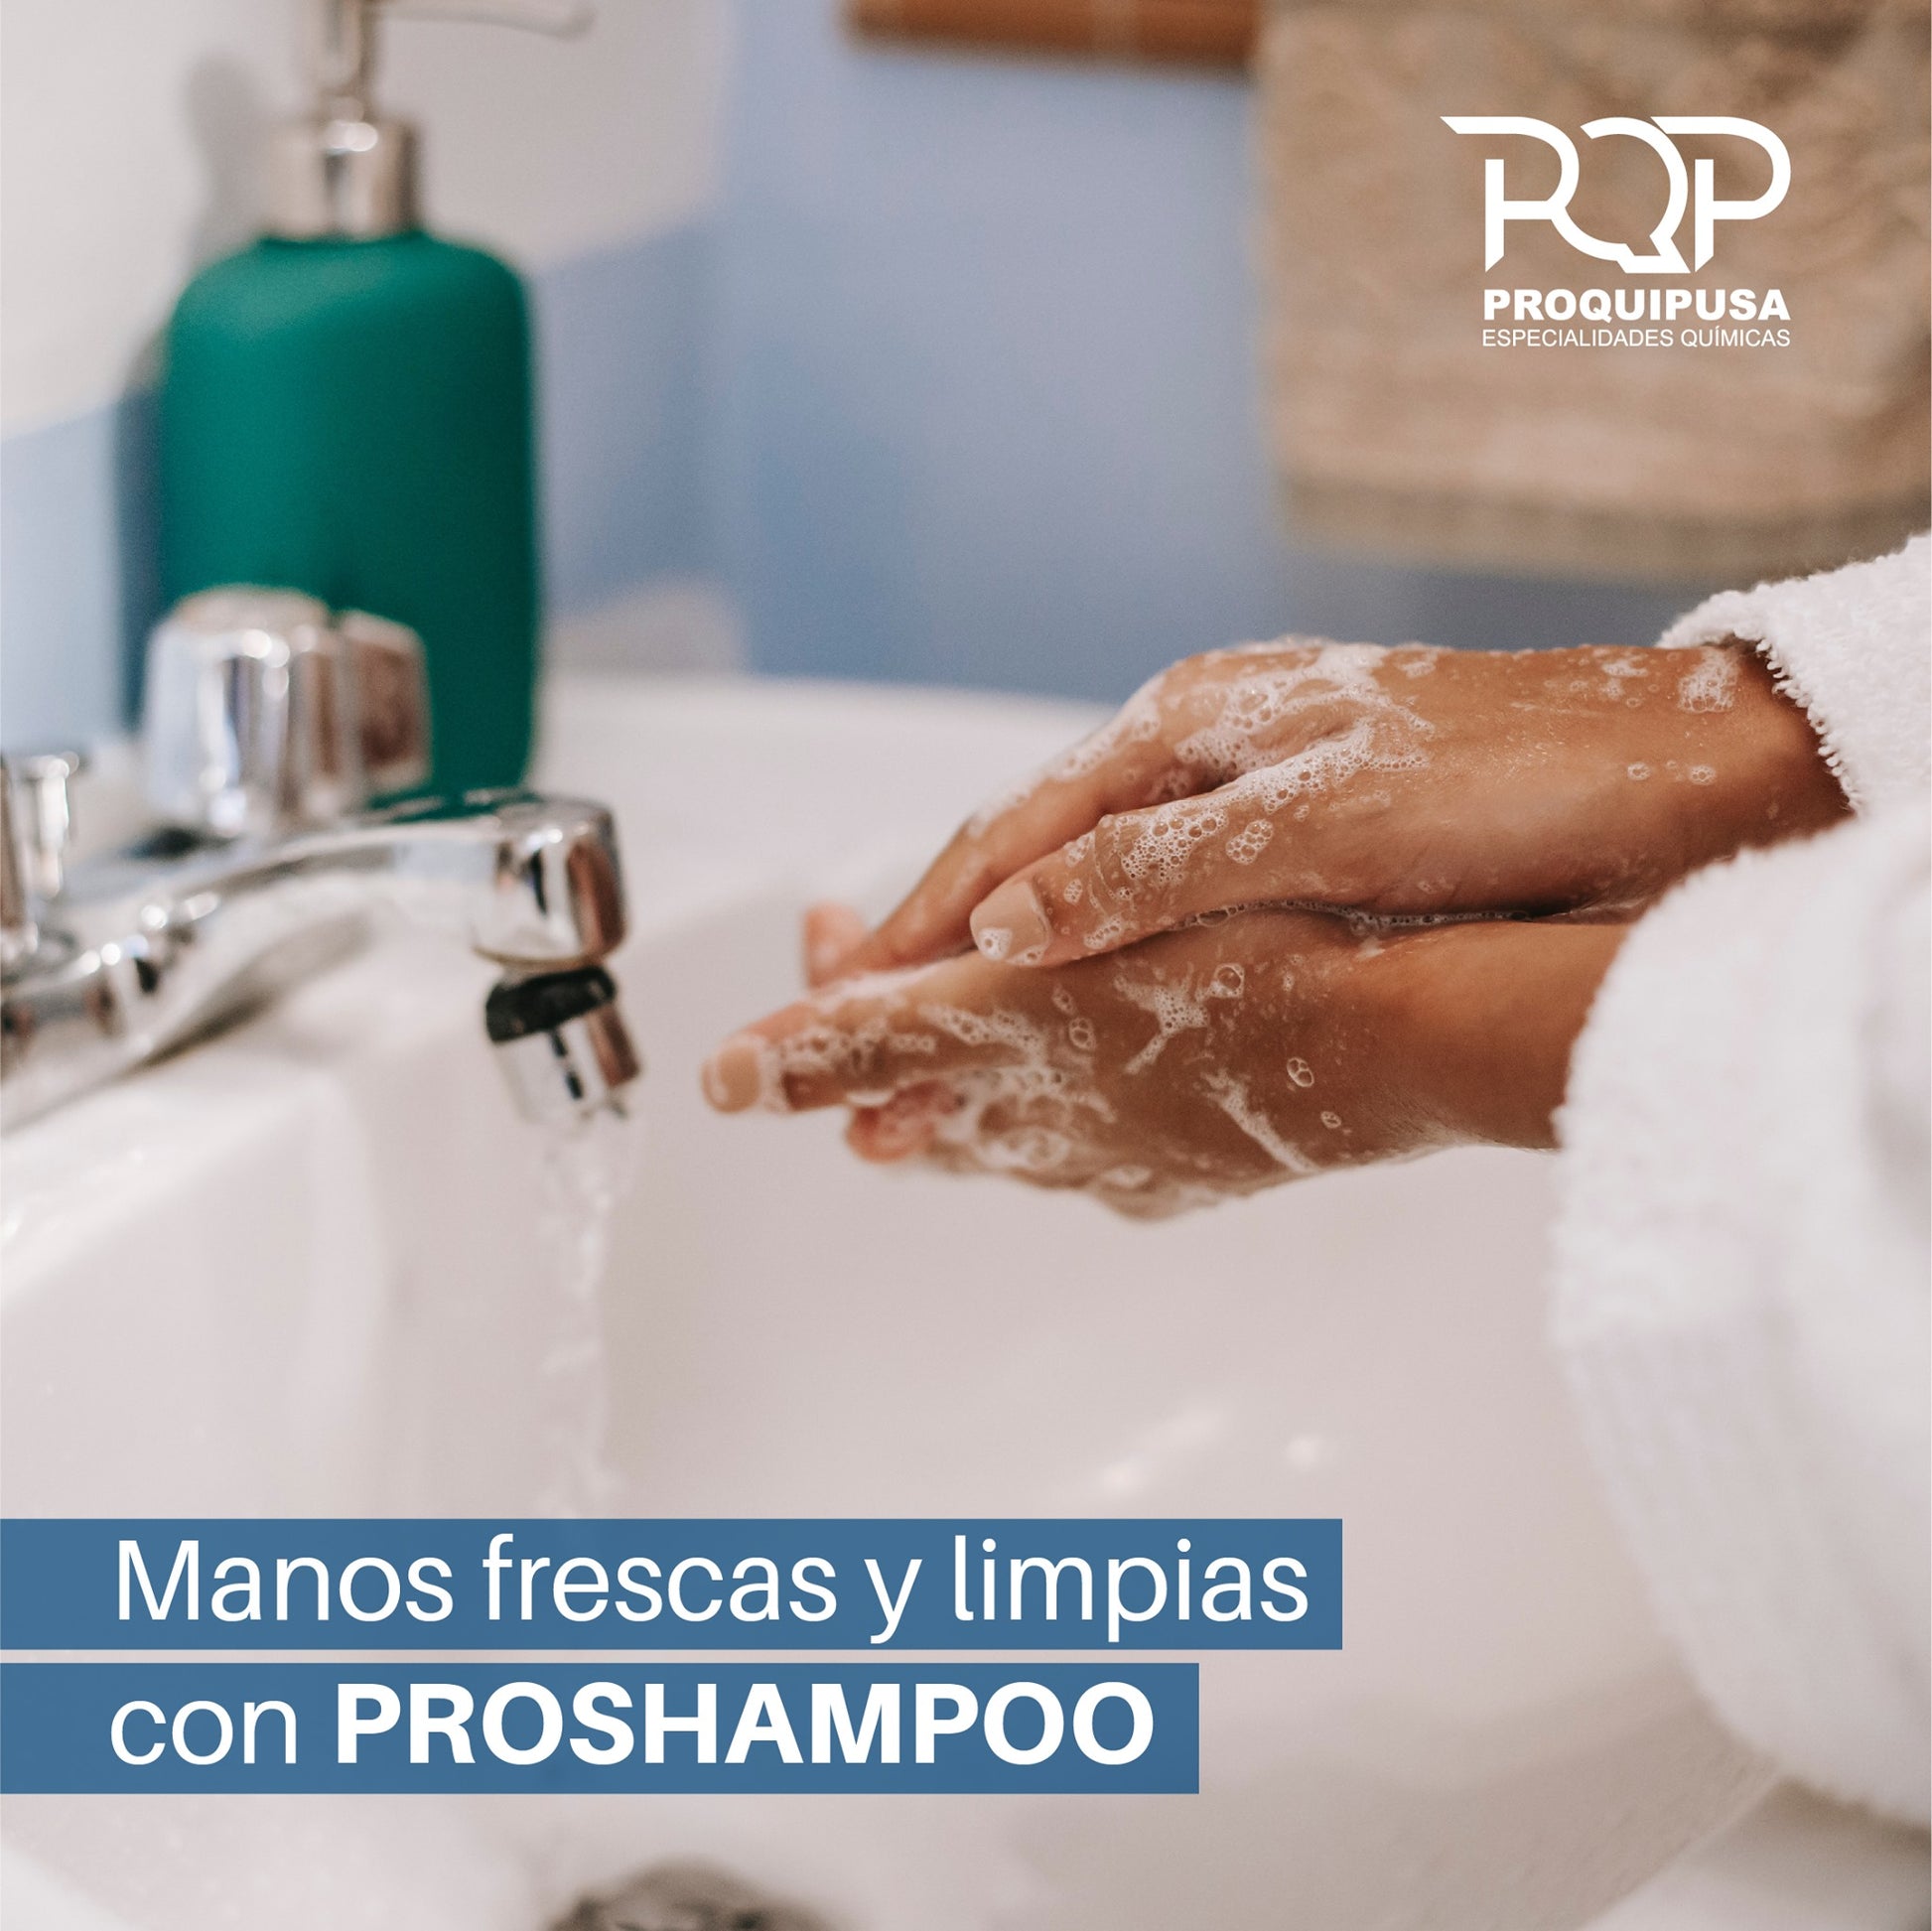 Jabón para manos PROSHAMPOO,Dish Detergent & Soap,Proquipusa